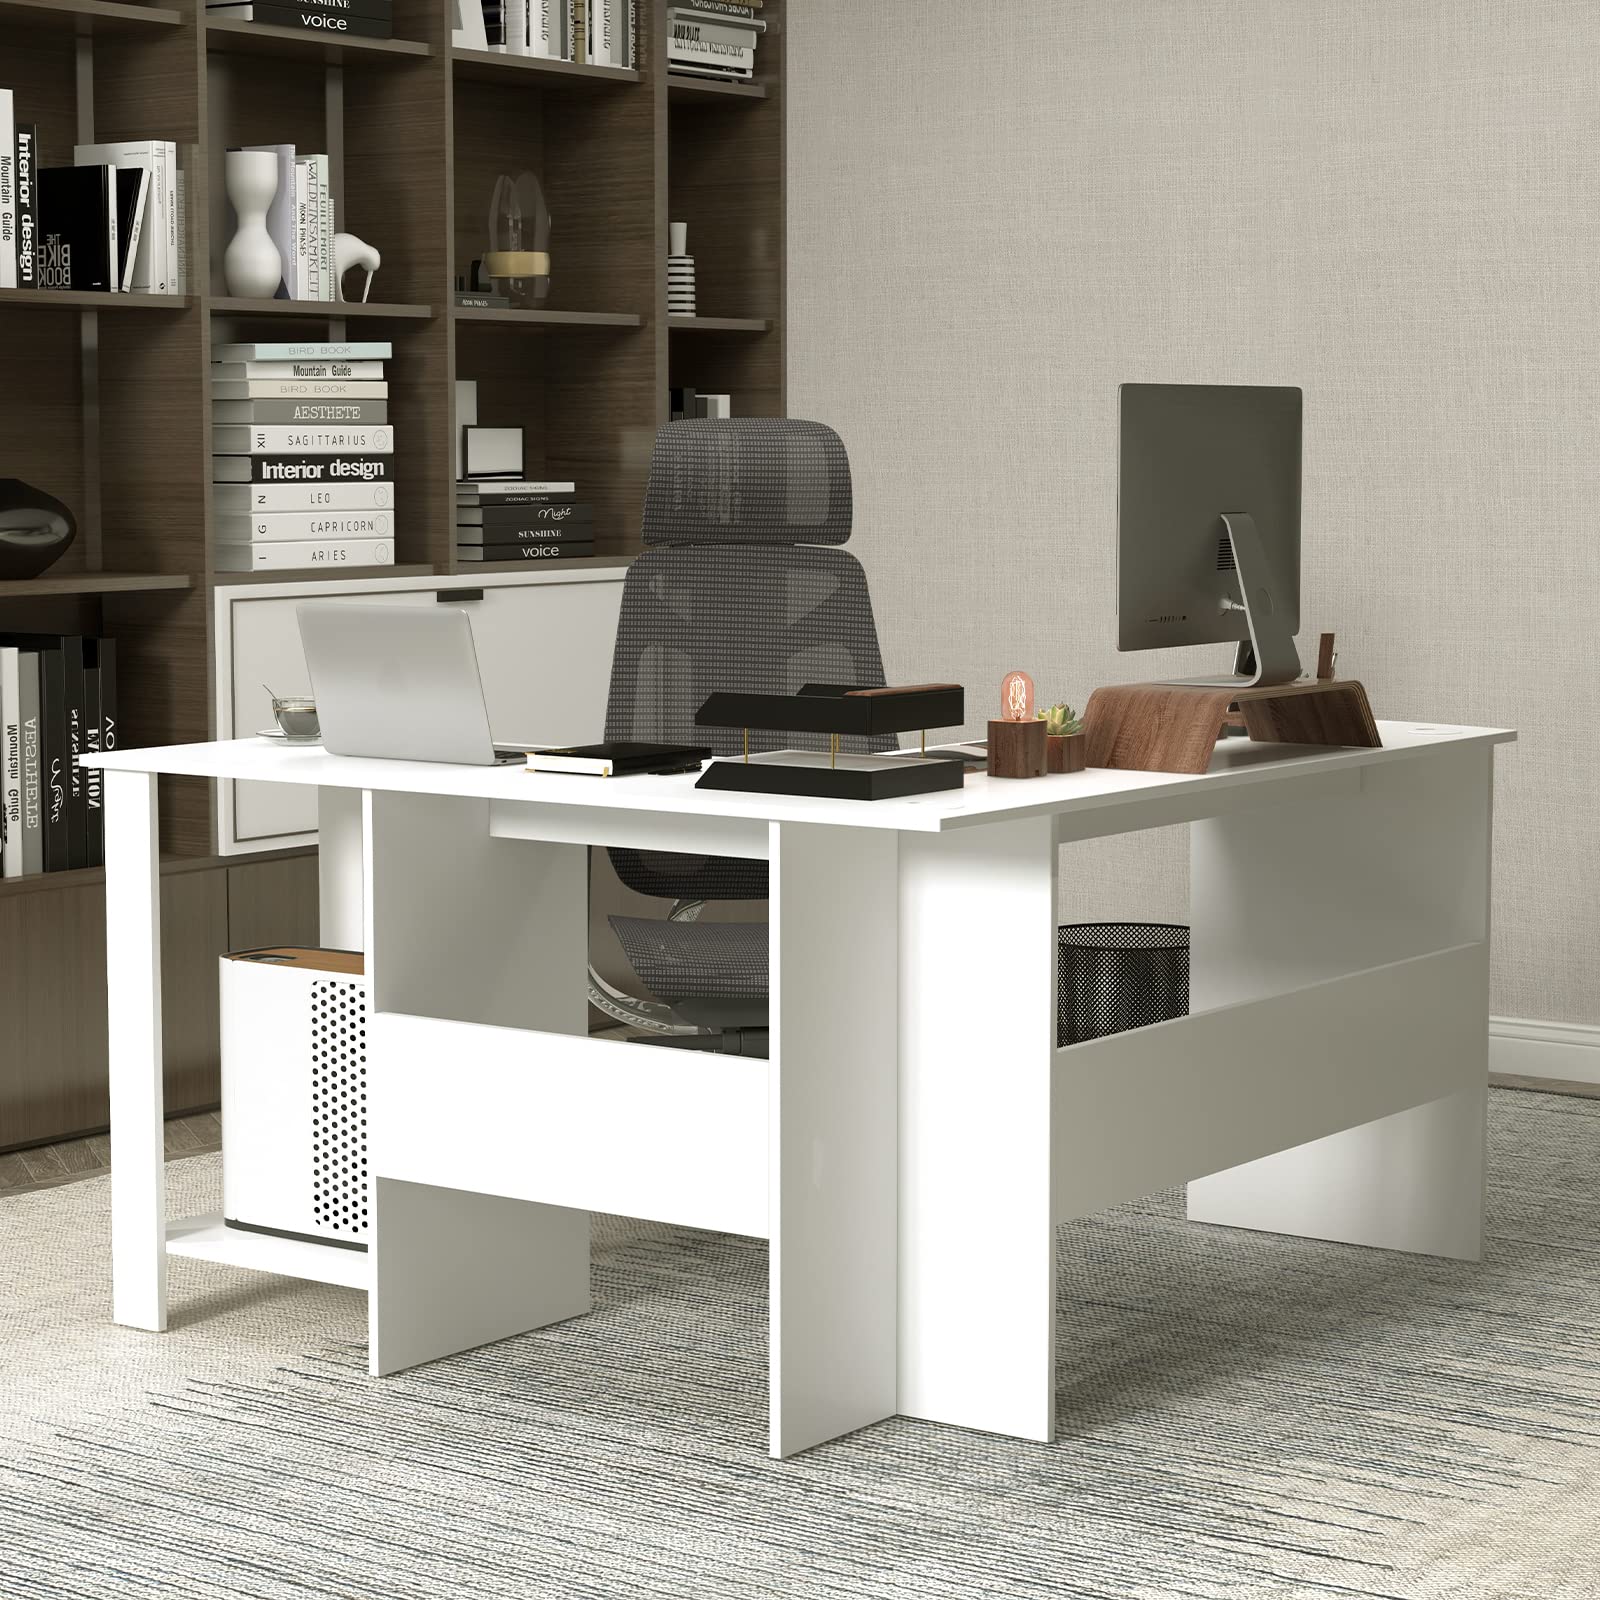 Giantex L Shaped Computer Desk, 51" Large Corner Desk with 2 Cable Holes & 2 Storage Shelves, White